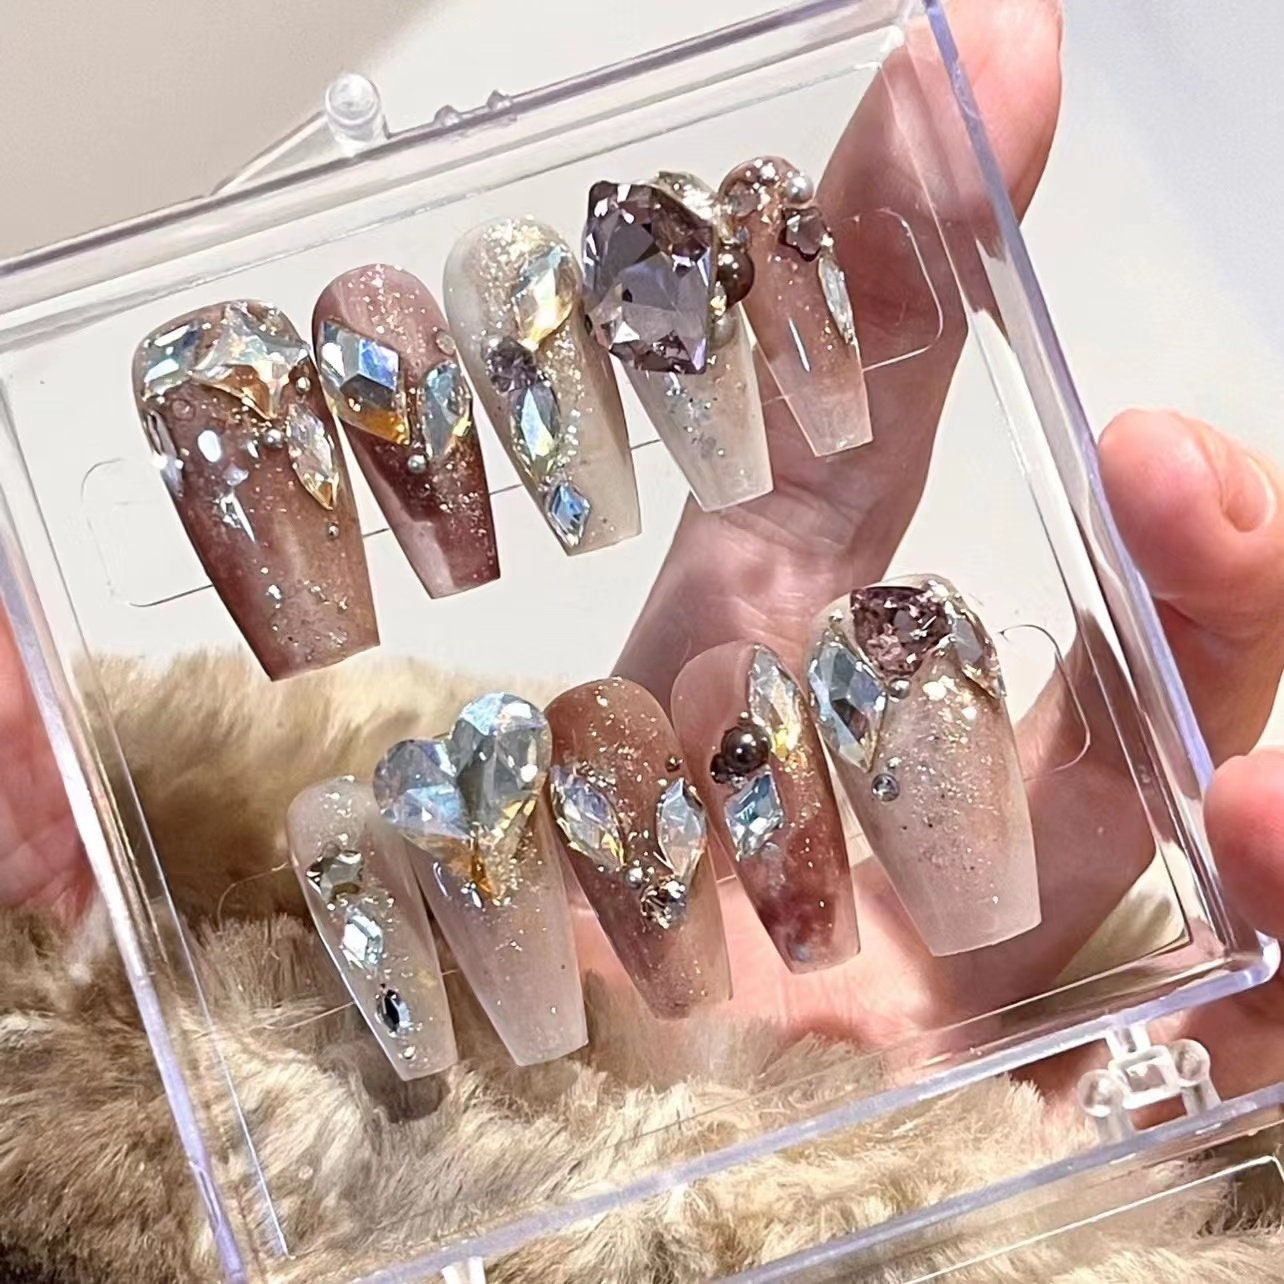 Glitter Large Crystal False Nails 24pcs 3D Rhinestone Pearl Decor